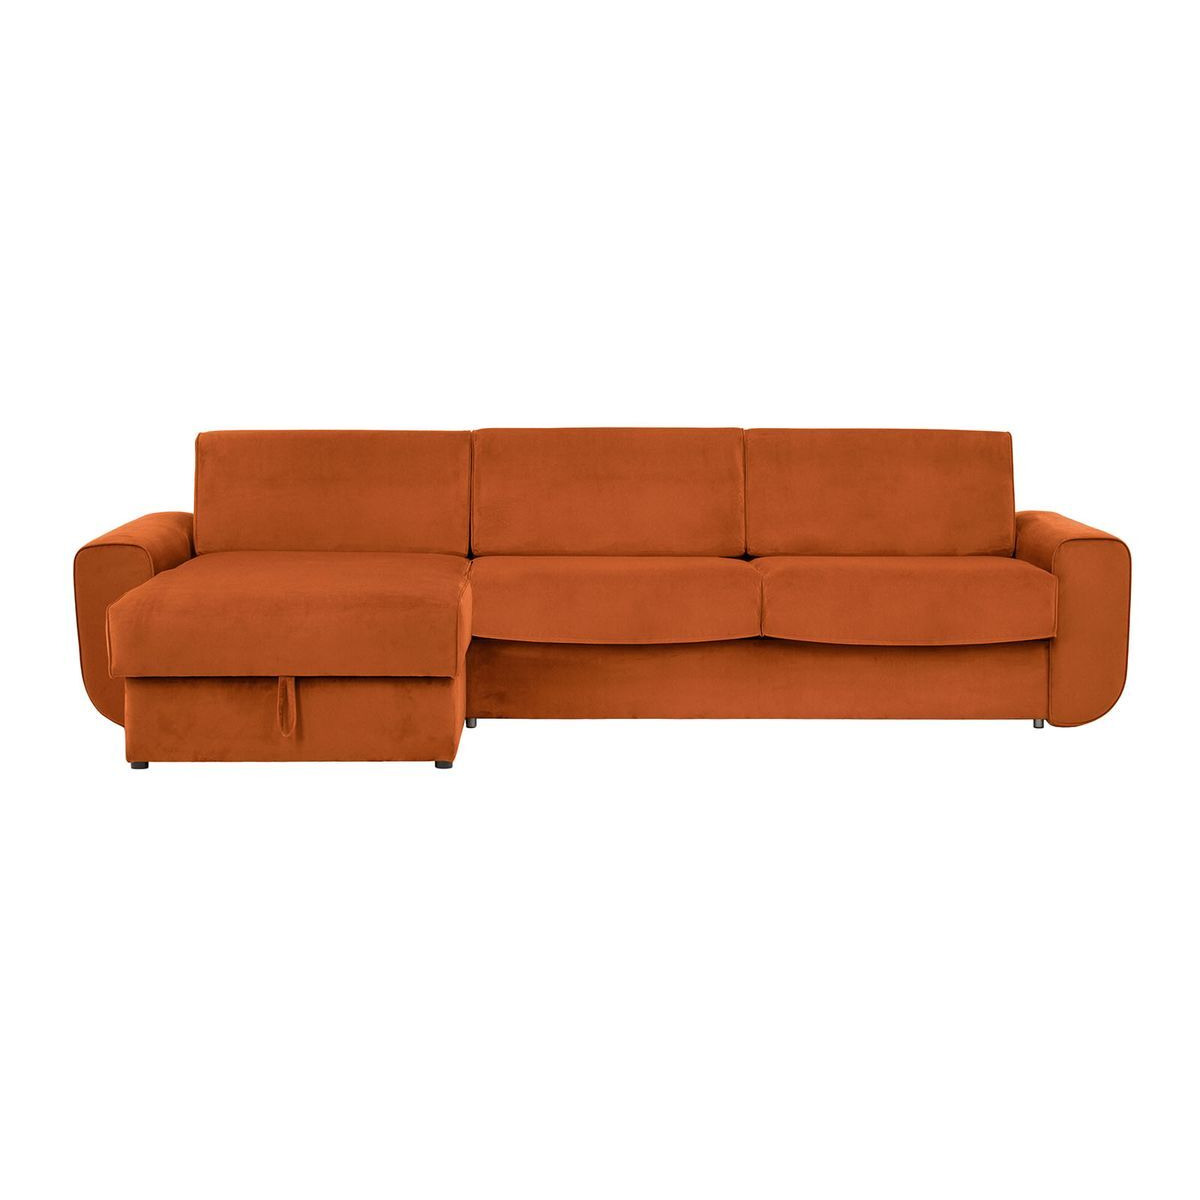 Salsa corner sofa bed with storage, light beige - image 1